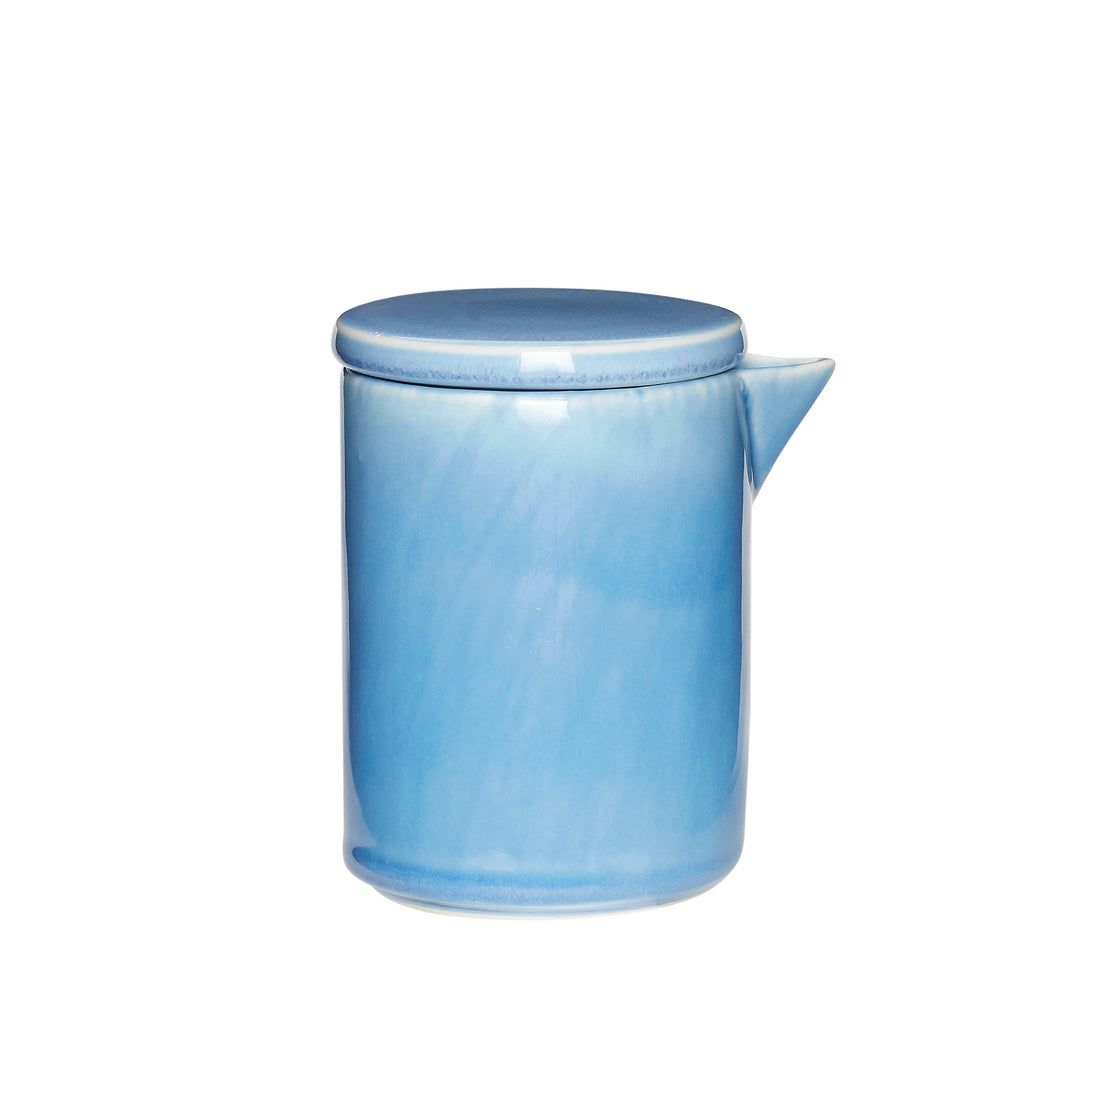 House Doctor - Milchkännchen, Keramik, blau Ø9xh9cm